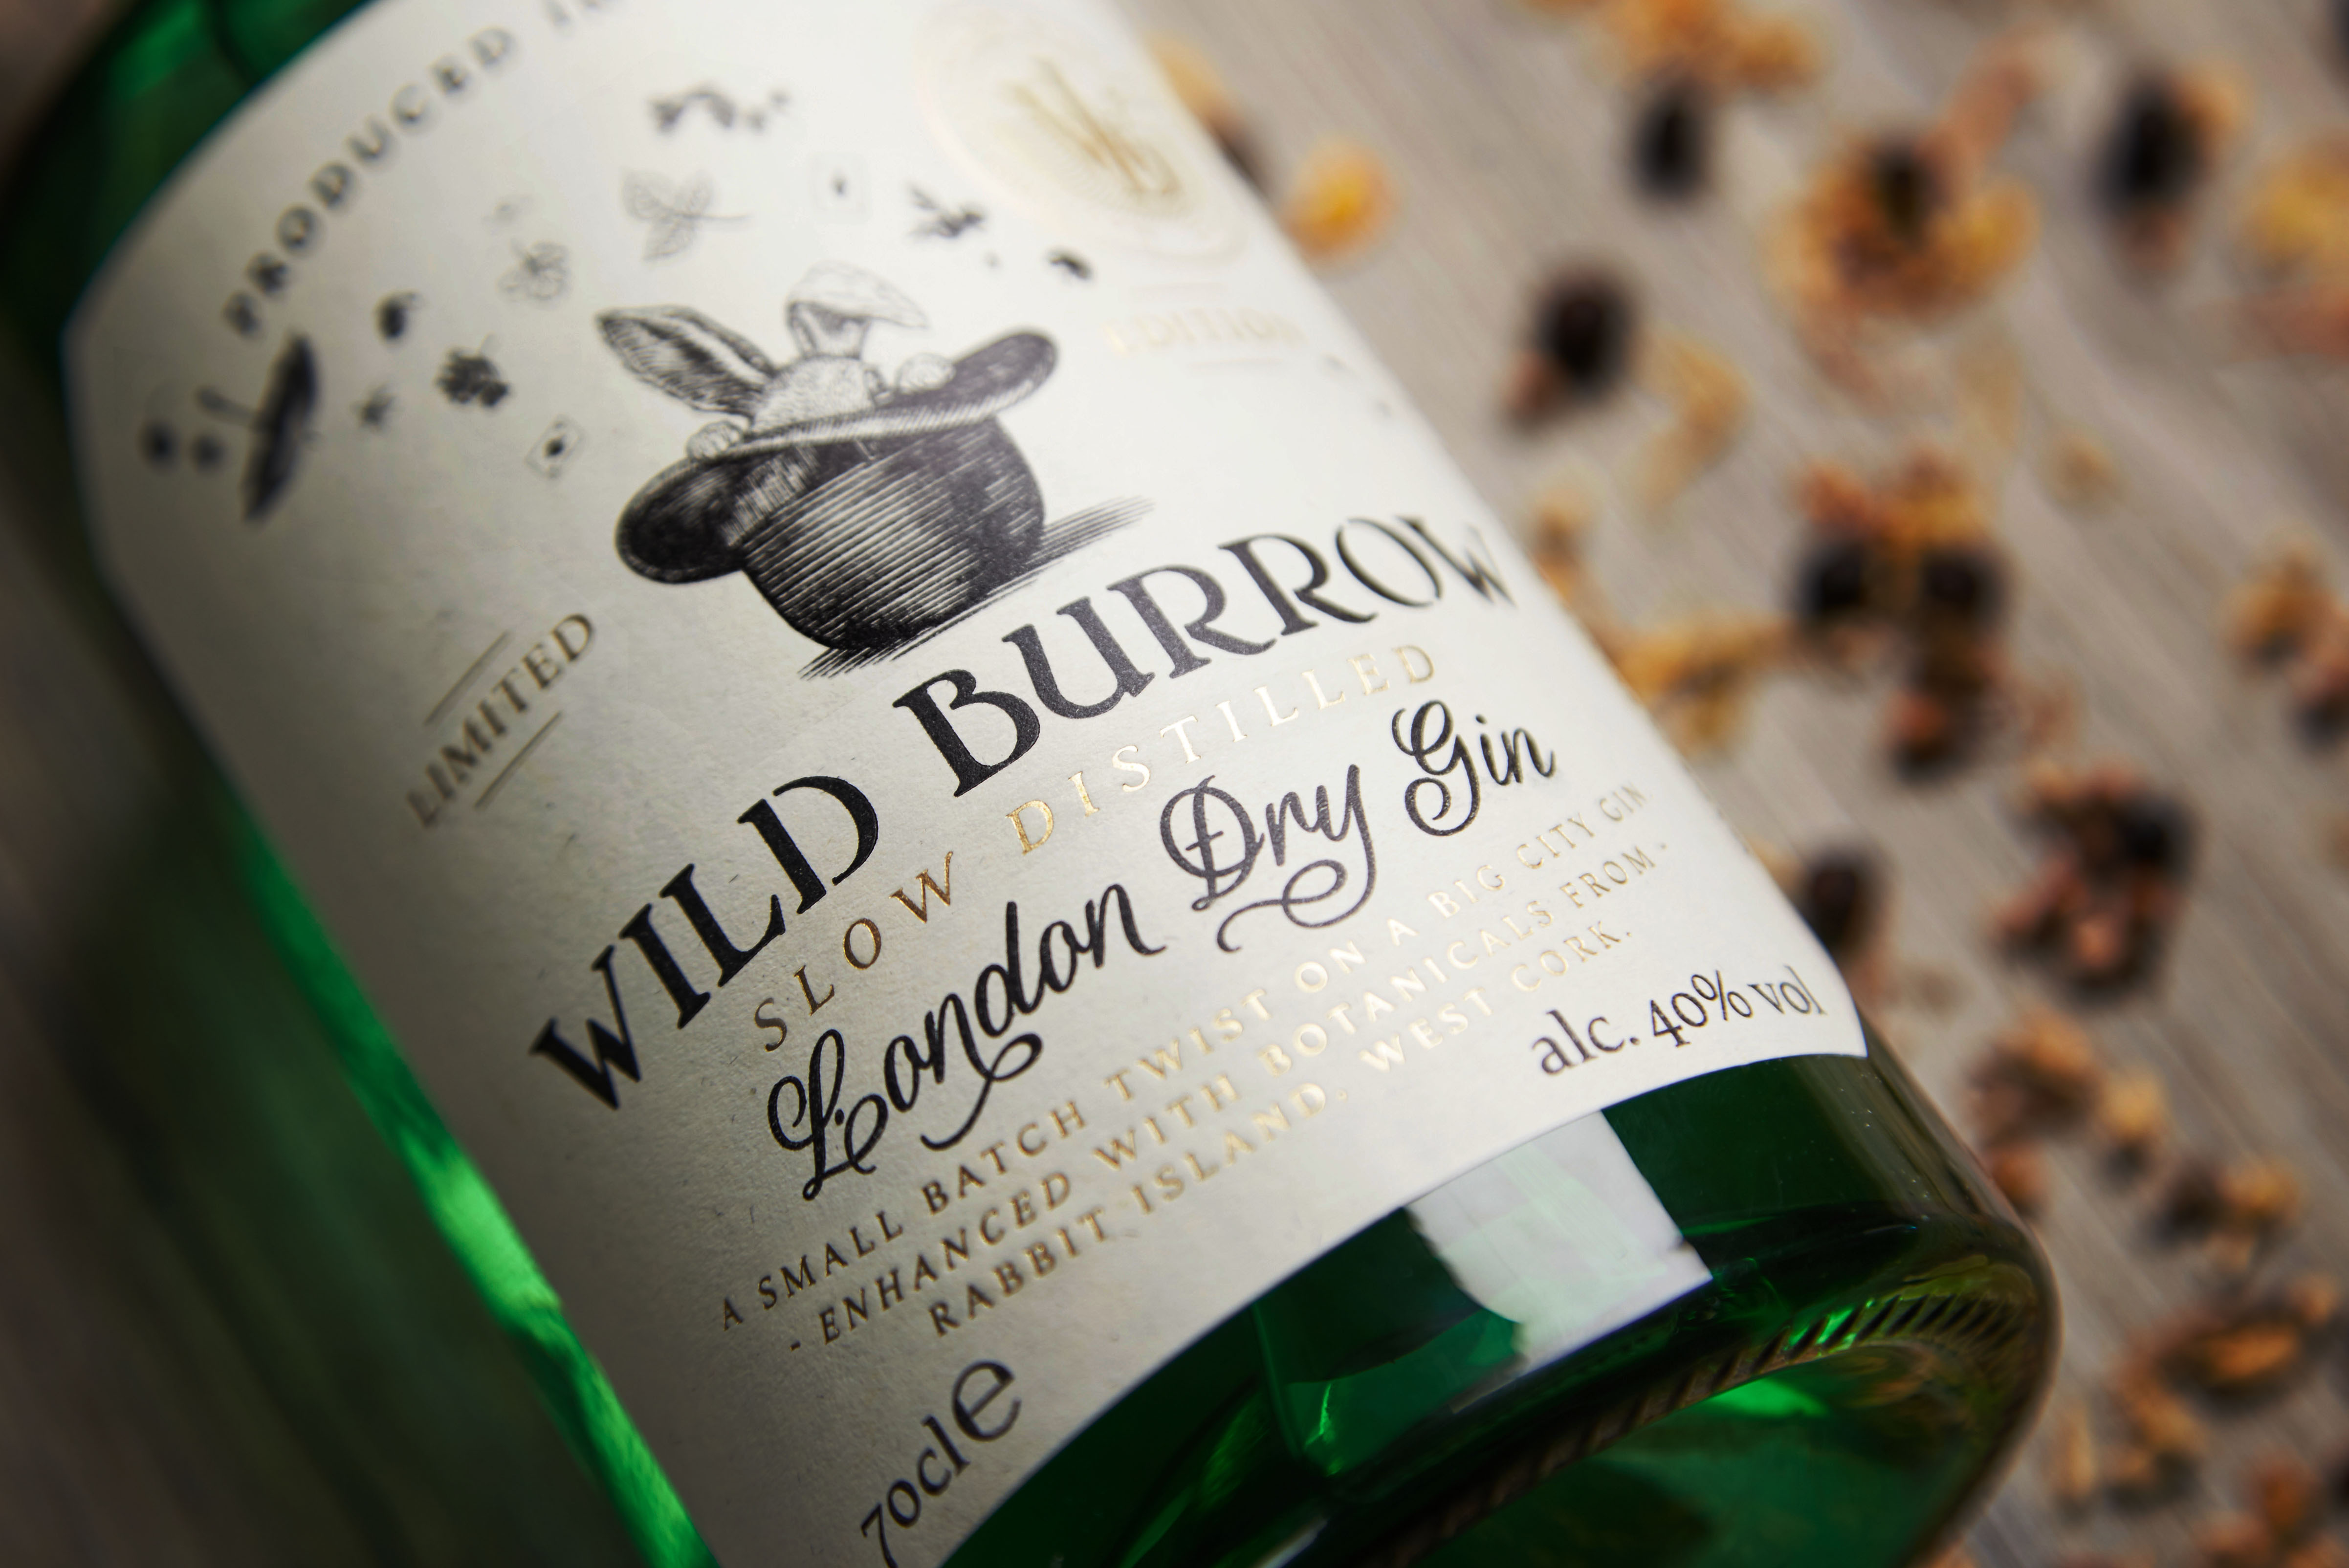 Wild Burrow Gin Range – 100 Archive